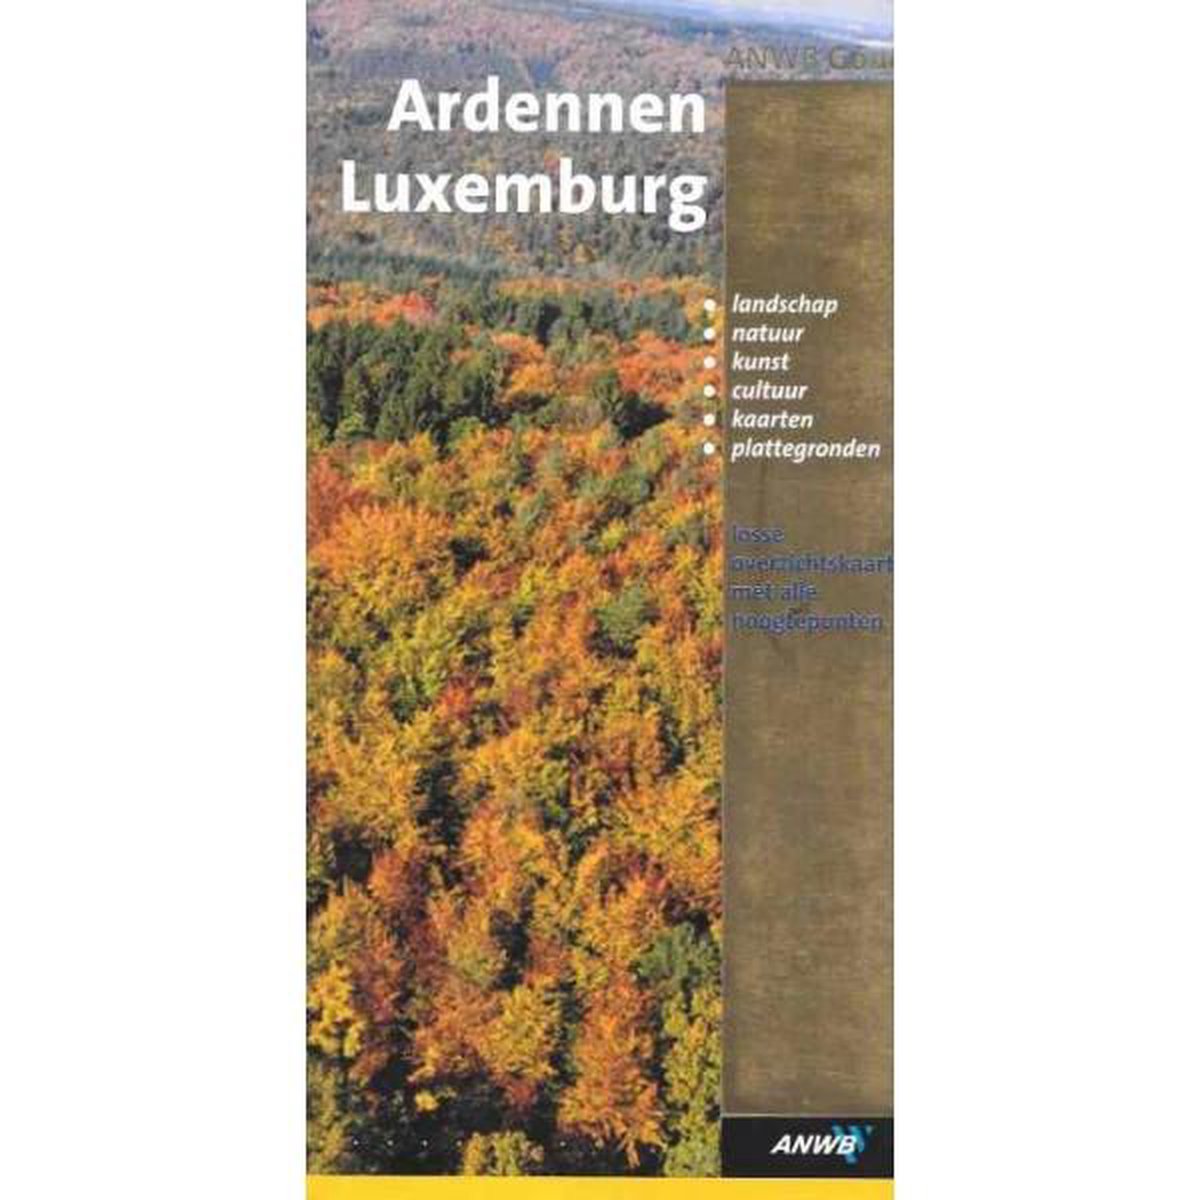 Ardennen, Luxemburg - Guido Fonteyn & Angela Heetvelt